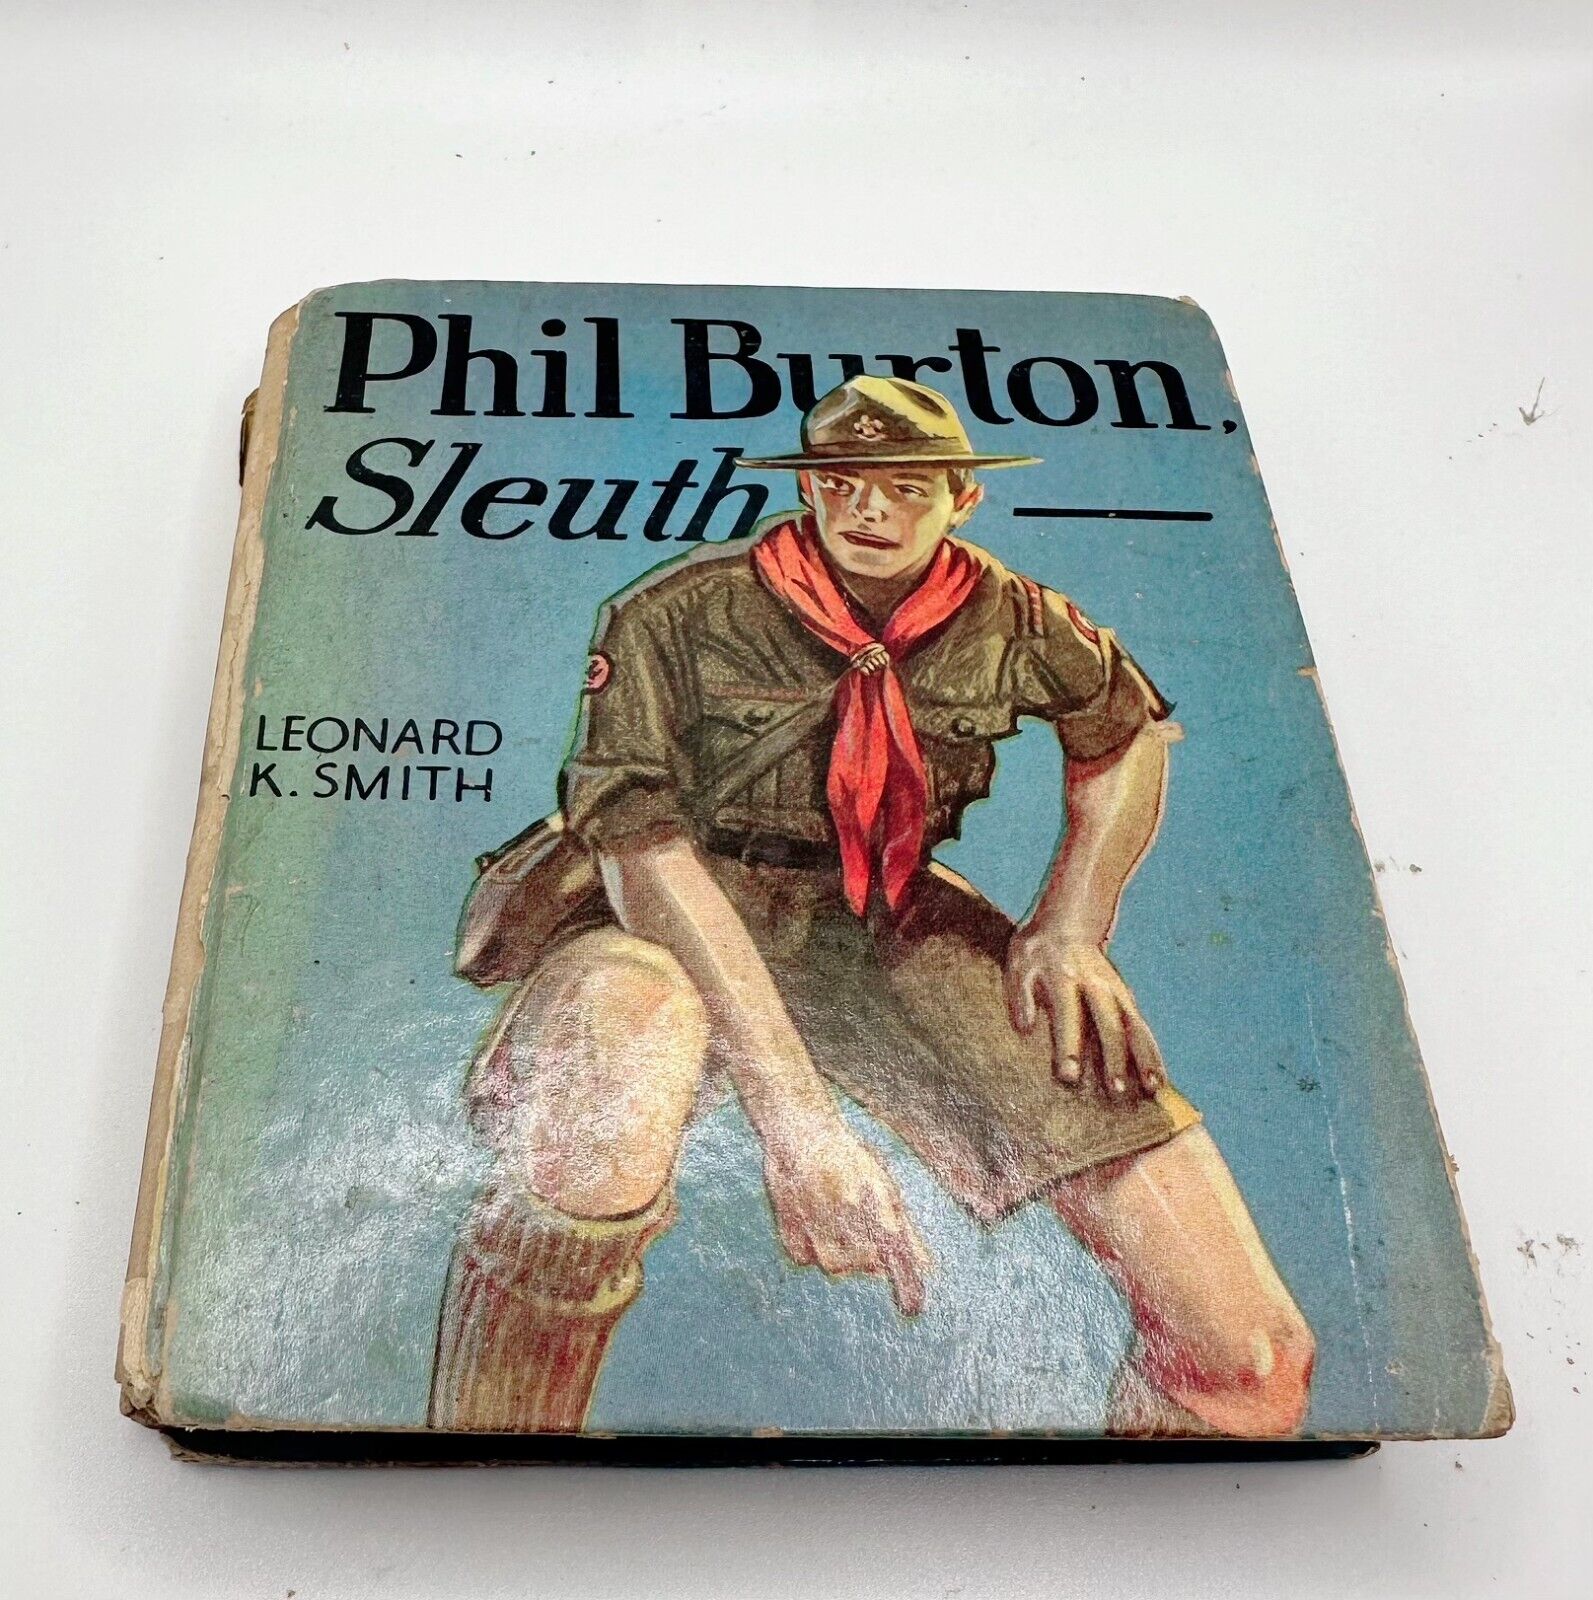 1937 Boy Scouts BSA - Phil Burton Sleuth Book - Leonard K. Smith